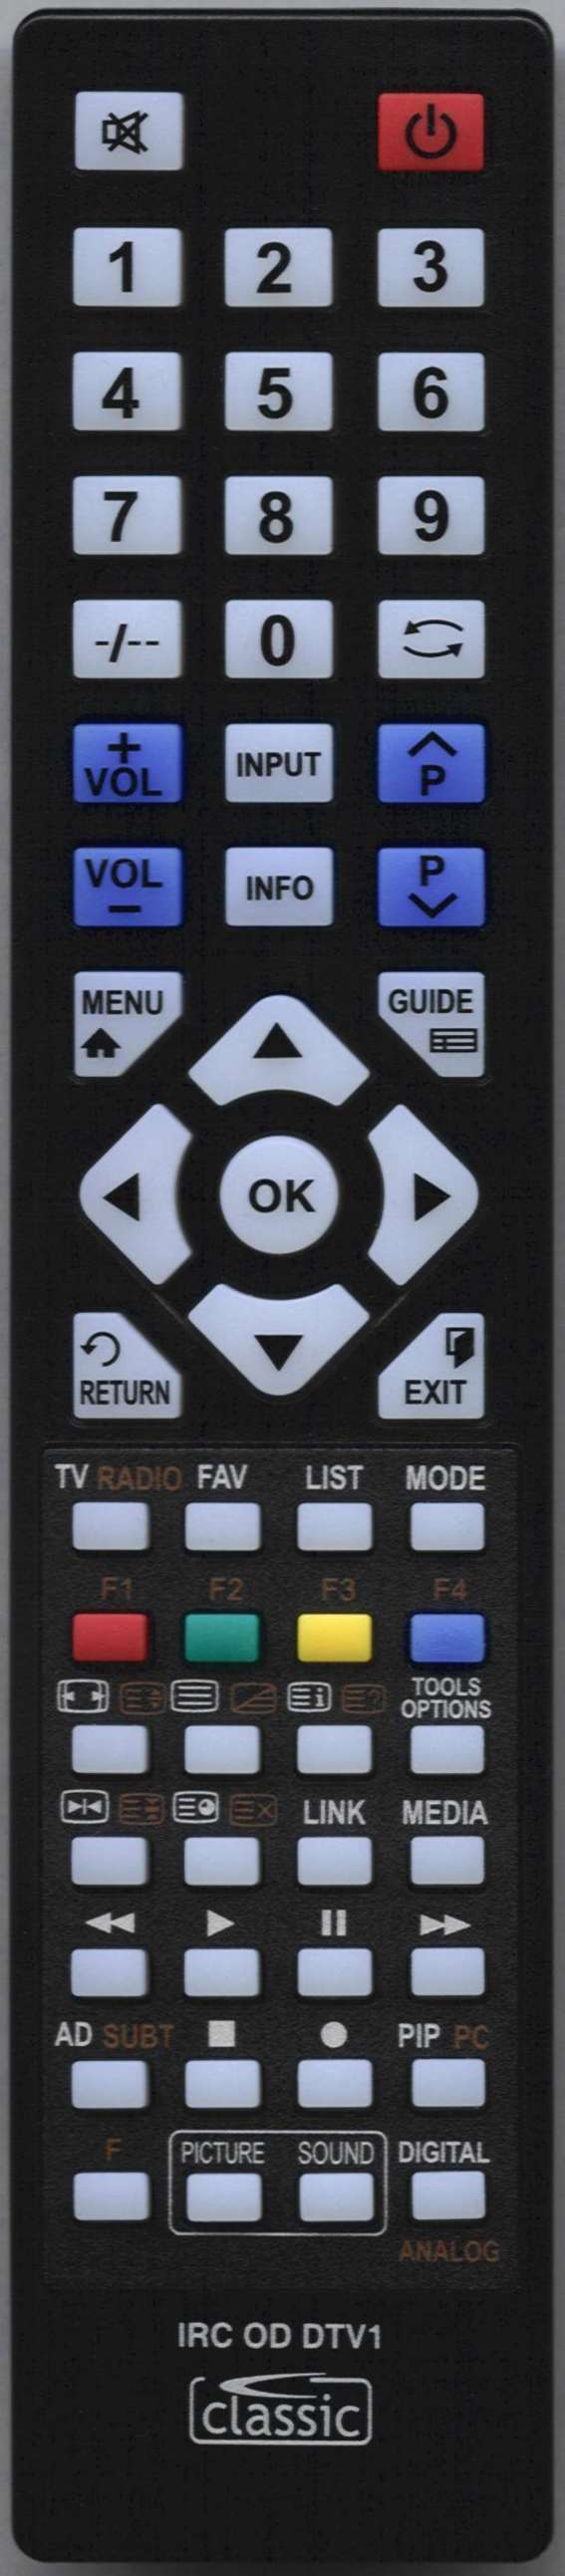 DIGITREX CFD1971 Remote Control